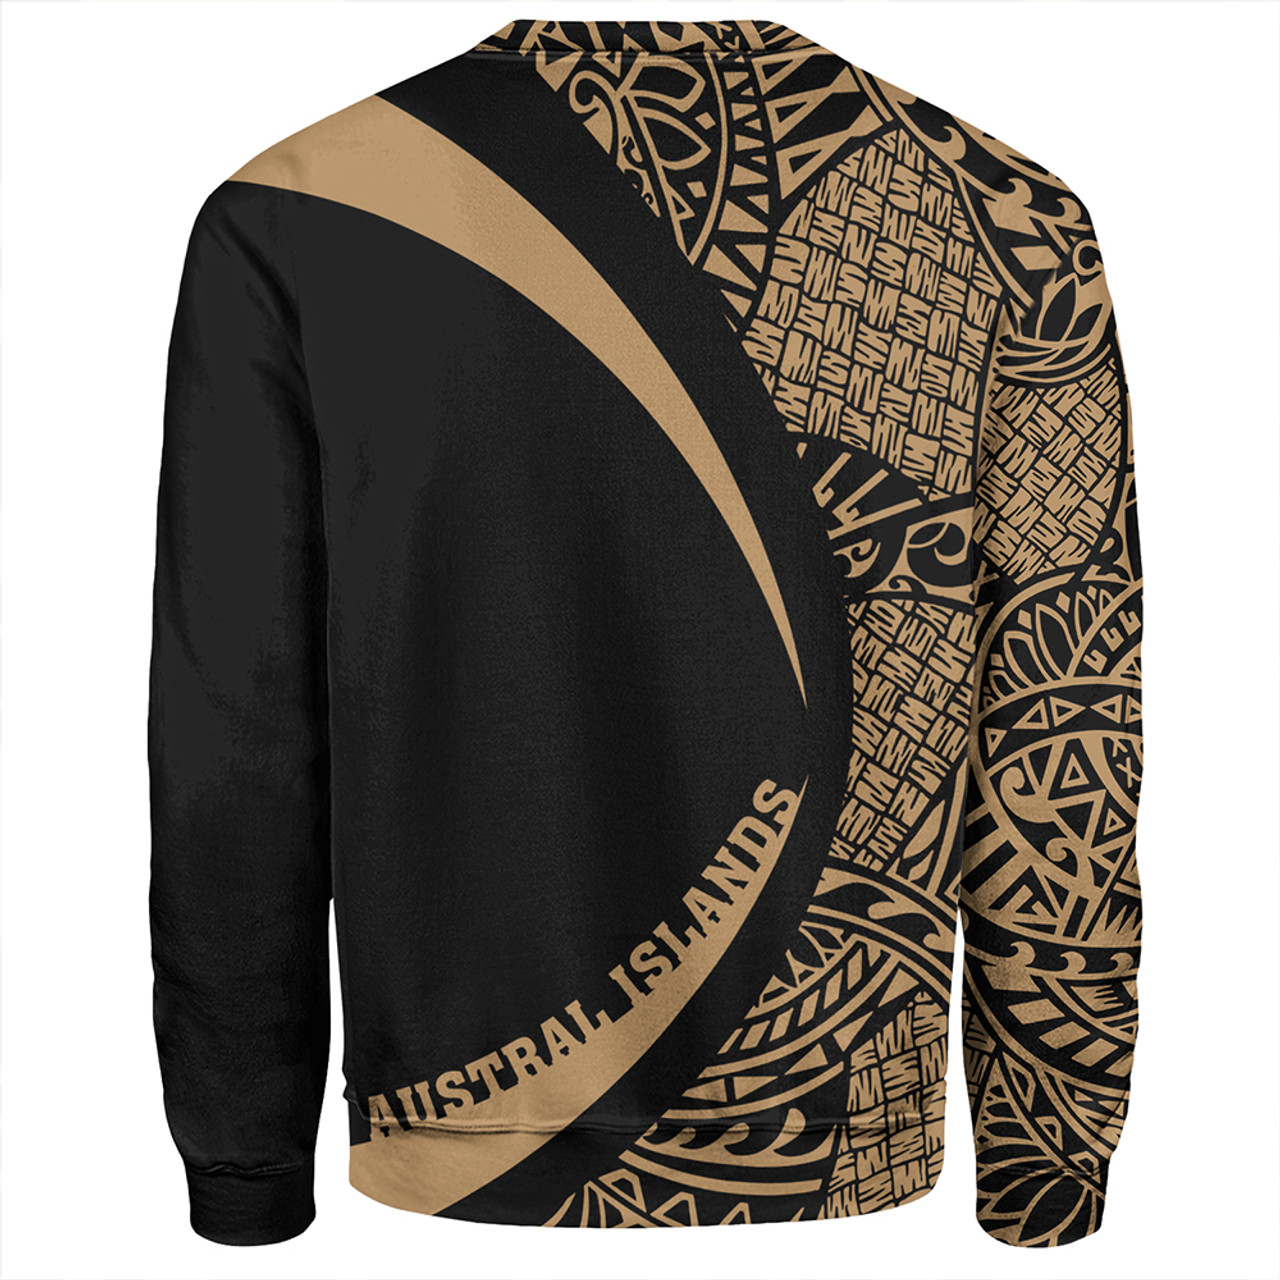 Austral Islands Sweatshirt Coat Of Arm Lauhala Gold Circle